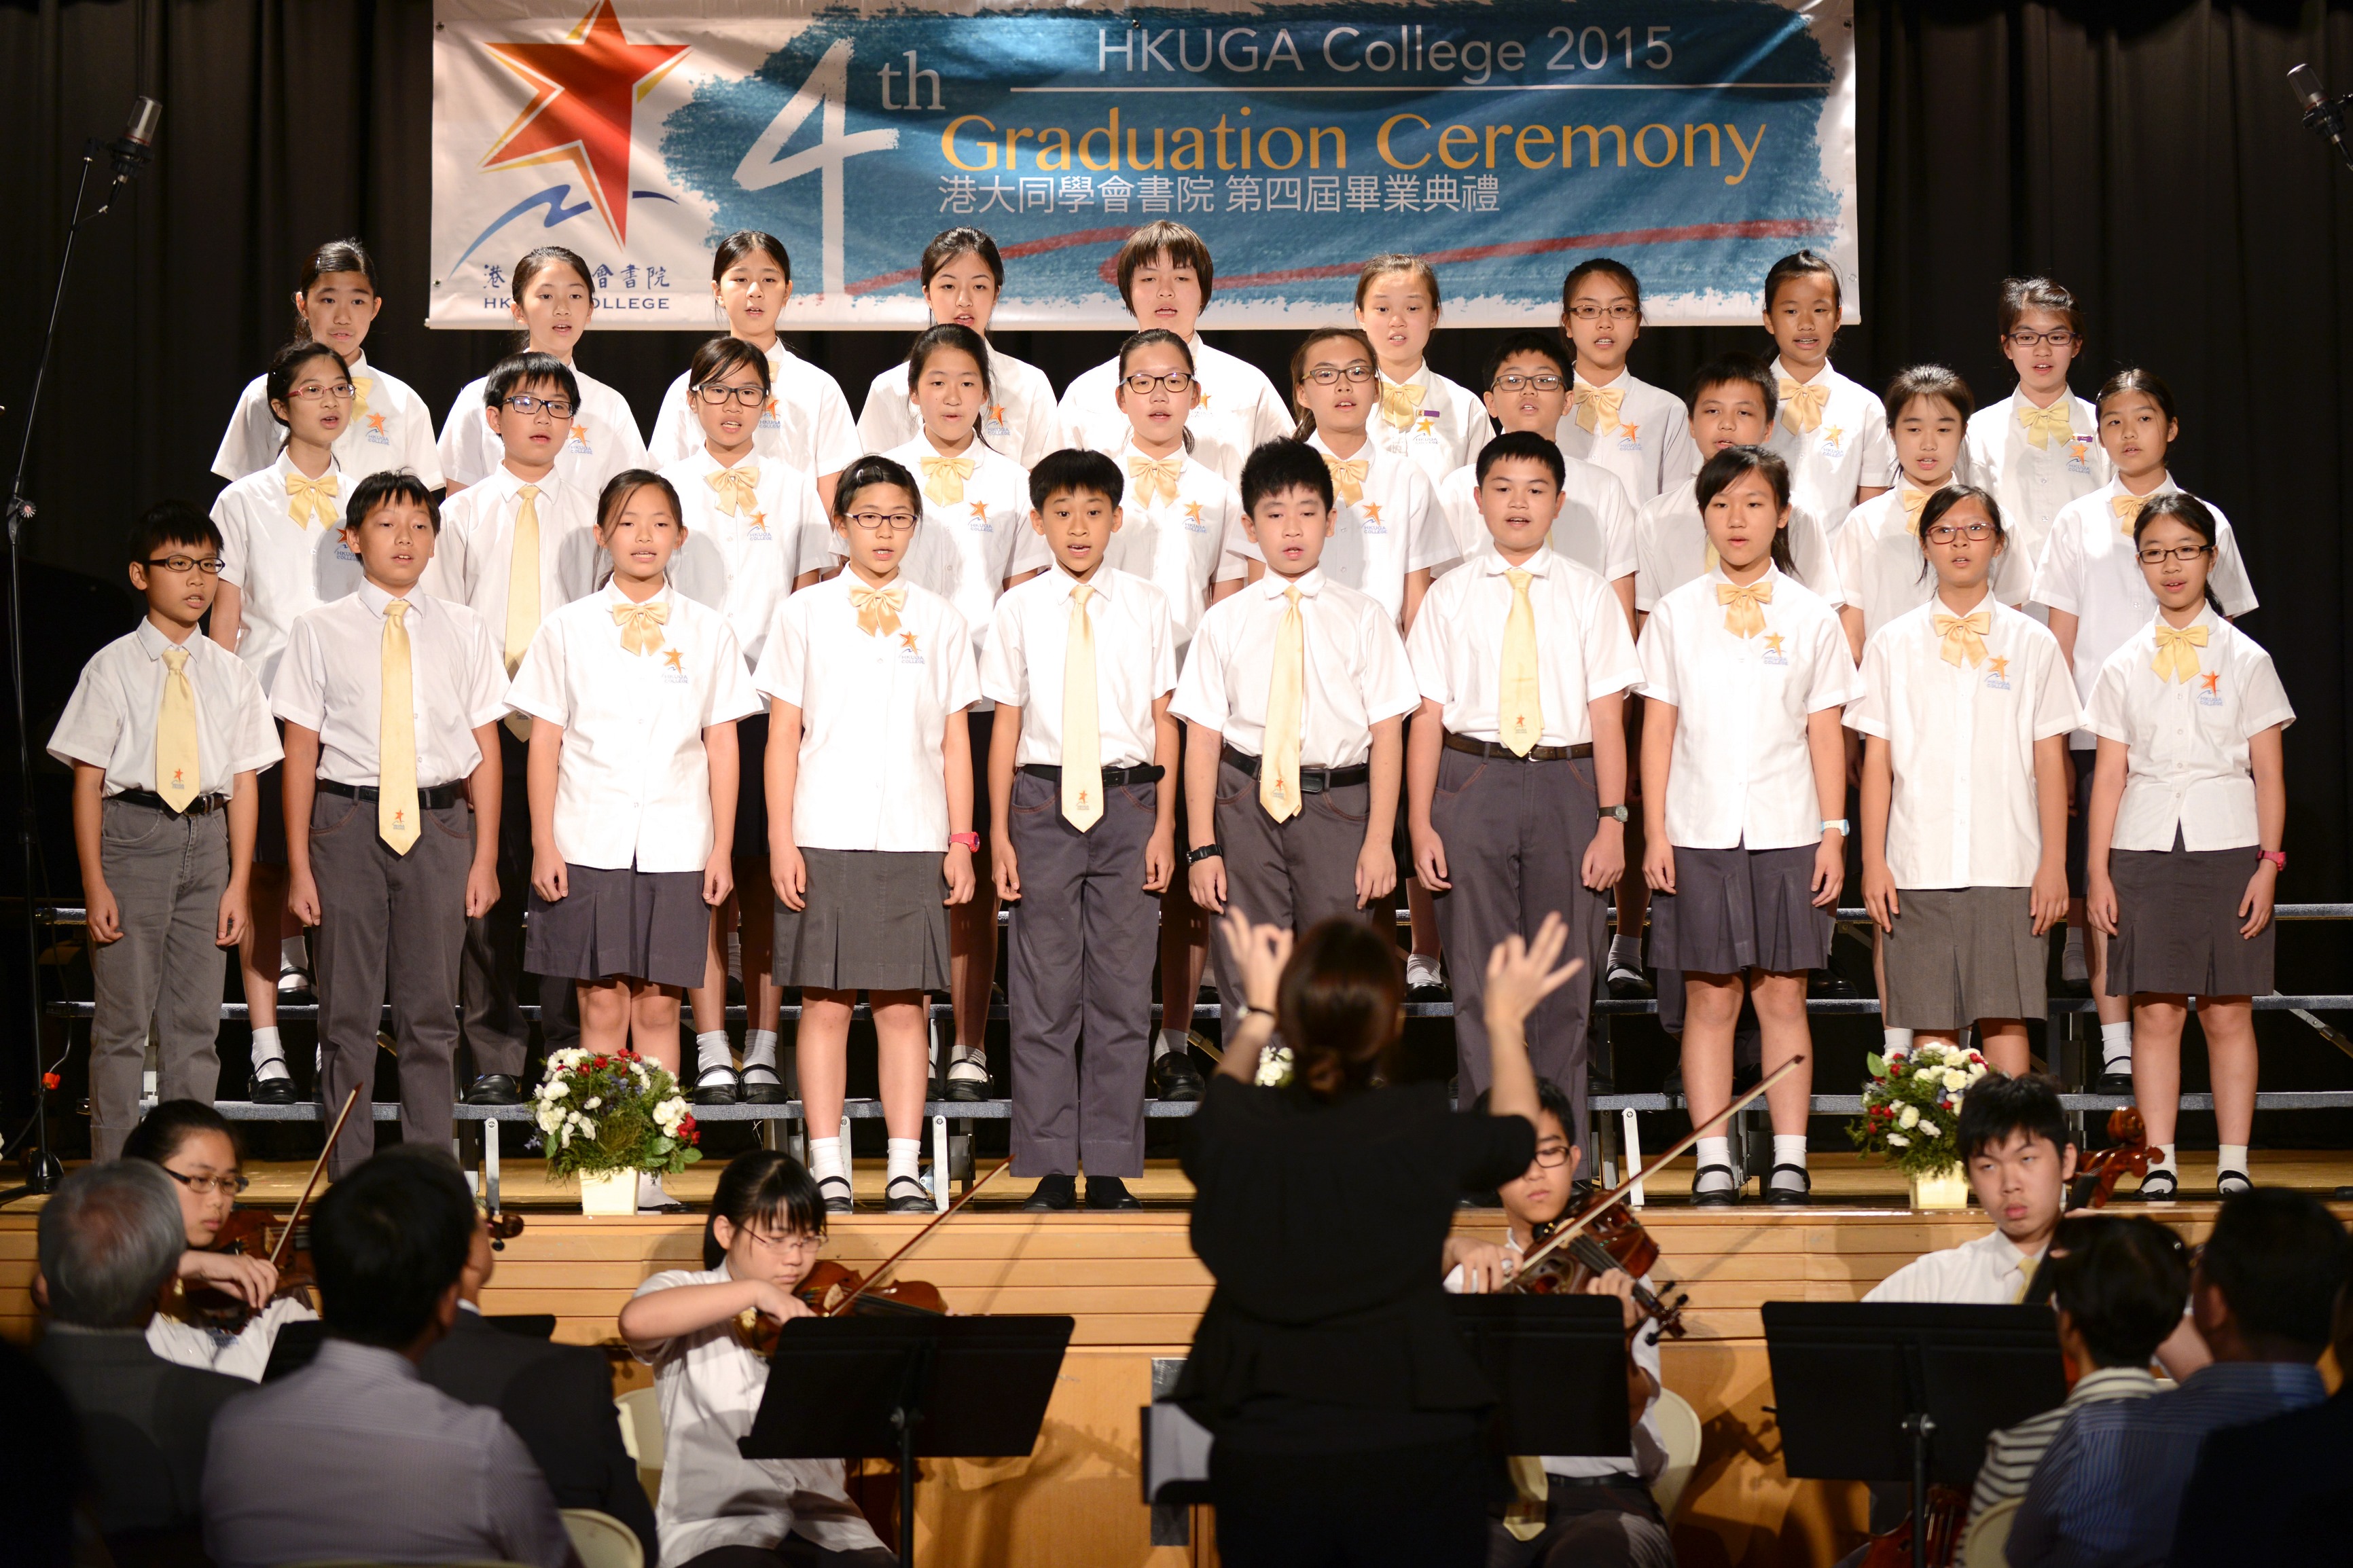 Performance by choir of HKUGAC